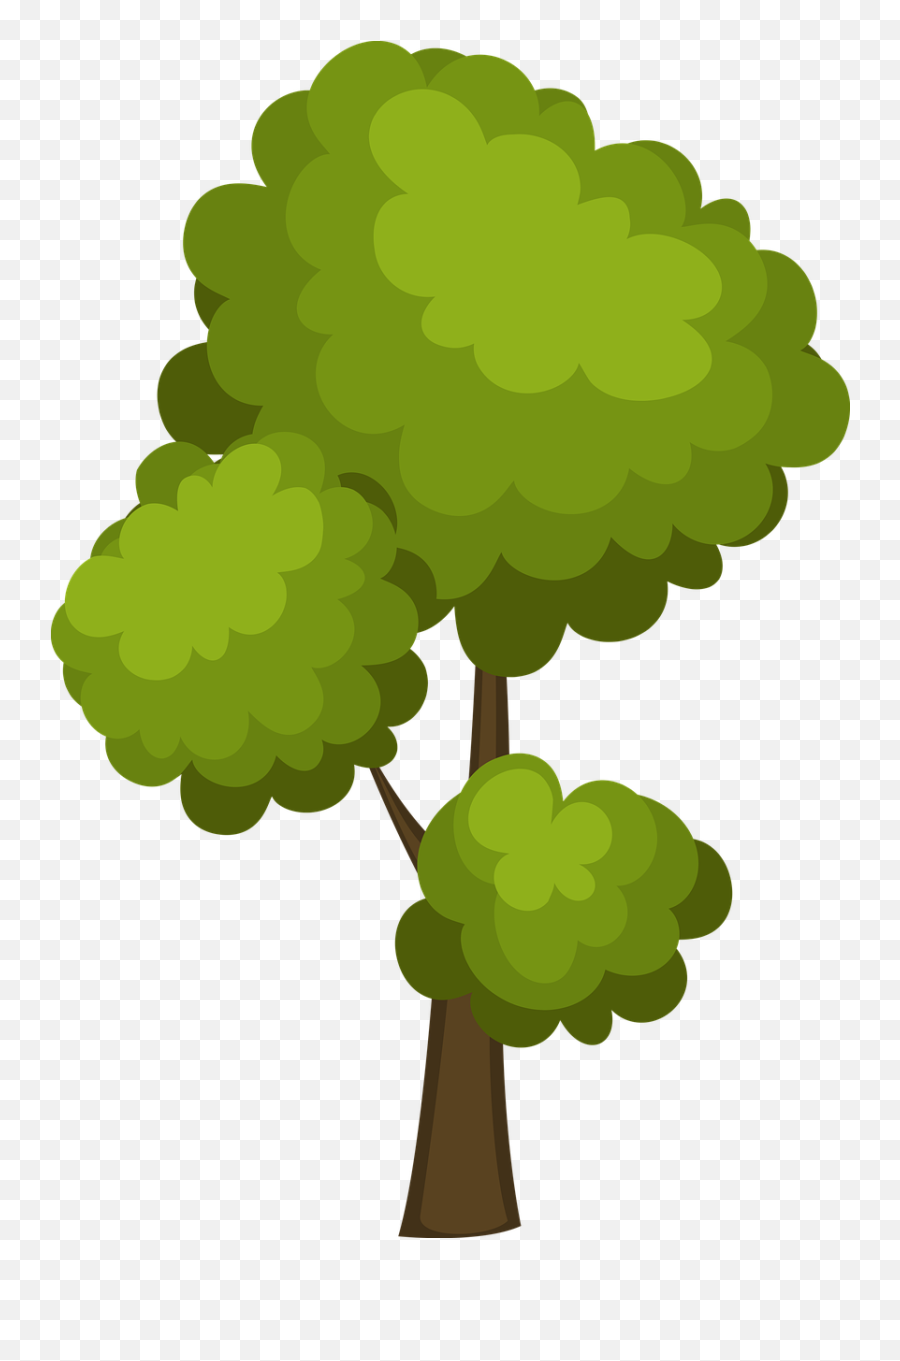 Tree Cartoon Icon - Free Image On Pixabay Tree Icon Png,Tree Icon Transparent